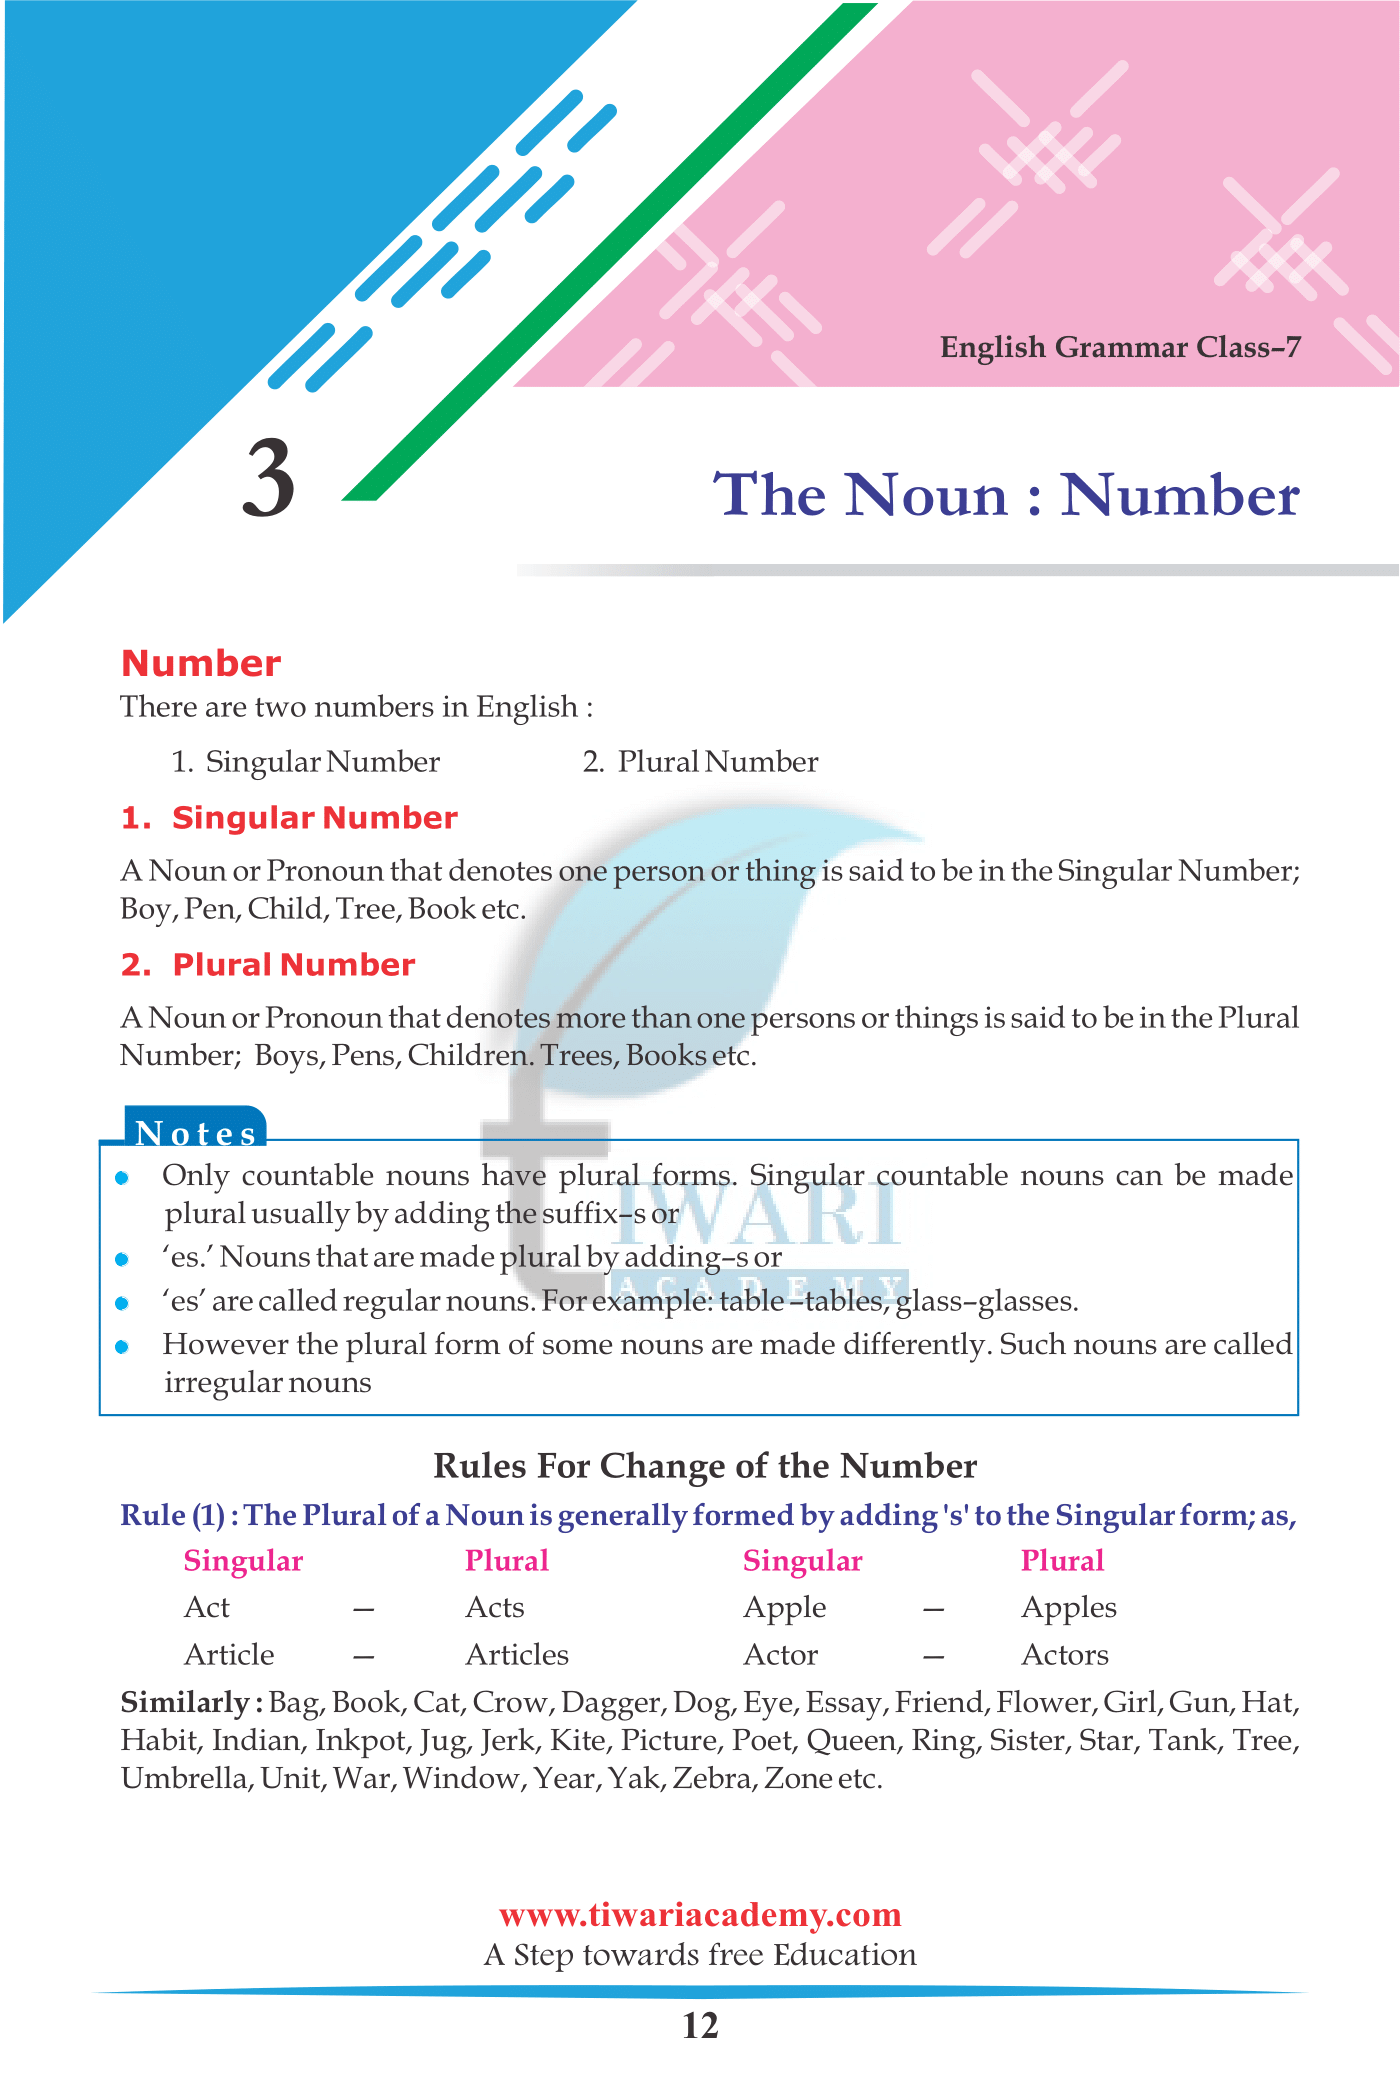 Class 7 English Grammar Chapter 3 The Noun Number